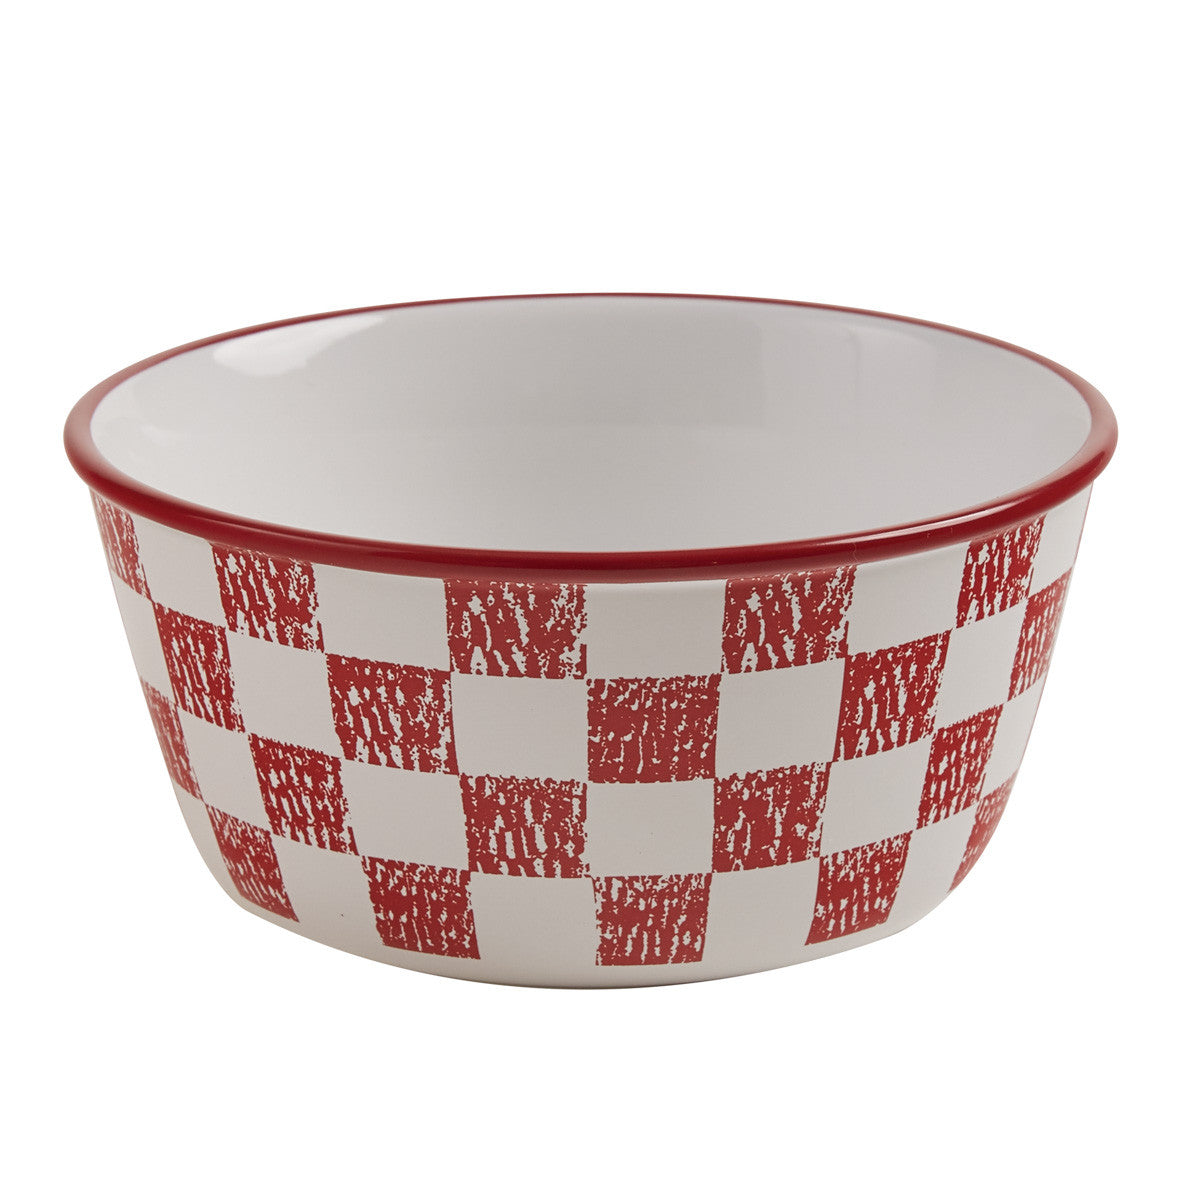 Chicken Coop Cereal Bowls - Check Set of 4 Park Designs